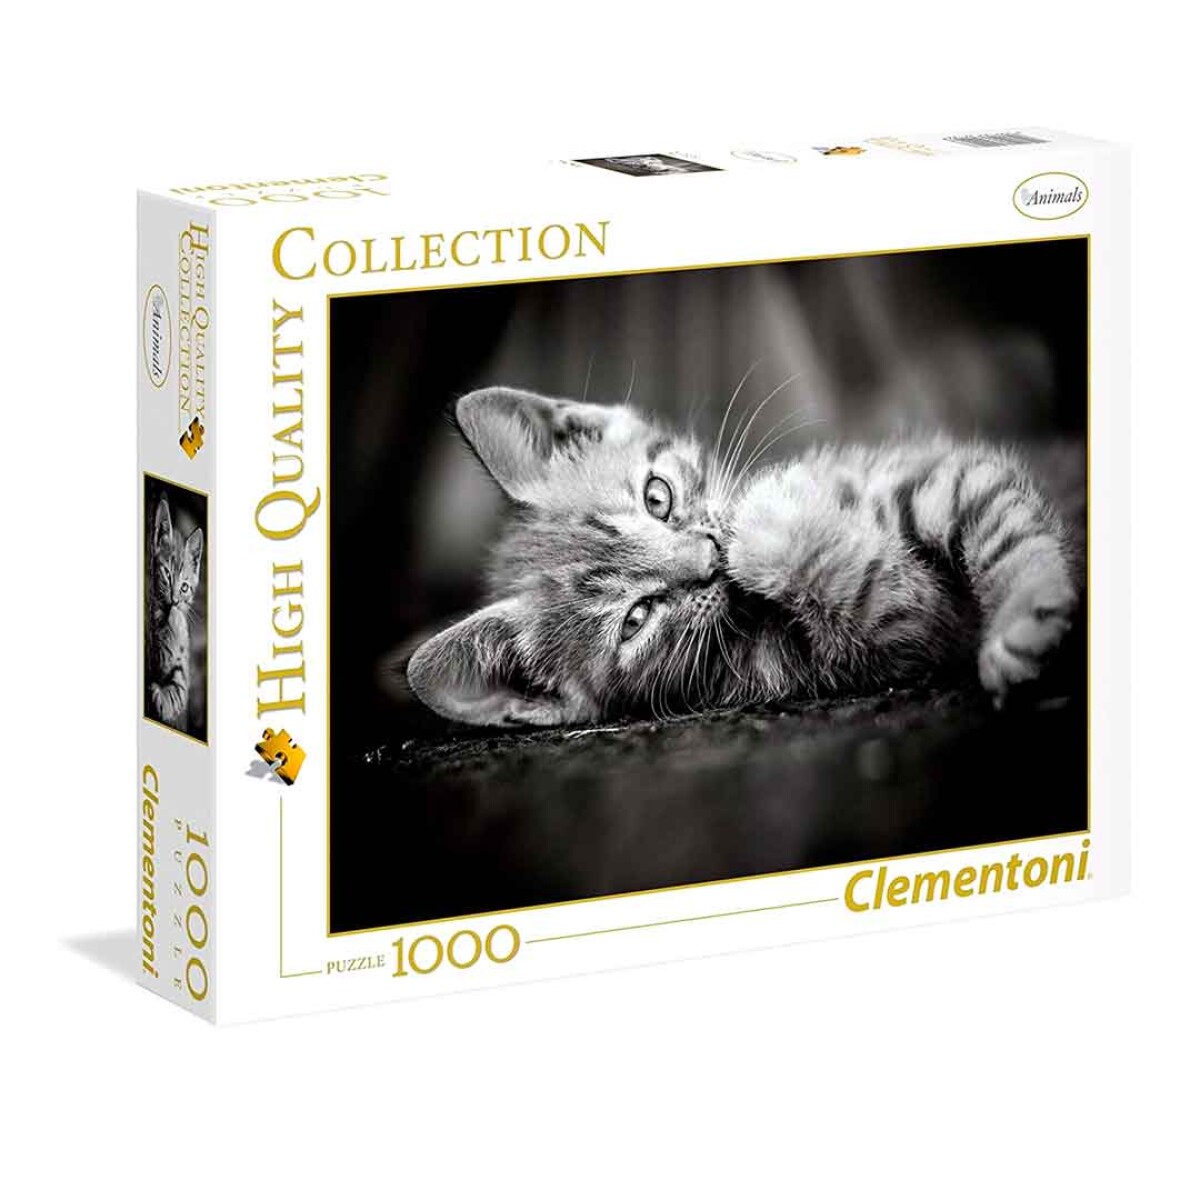 Puzzle Clementoni 1000 piezas Gatito High Quality - 001 